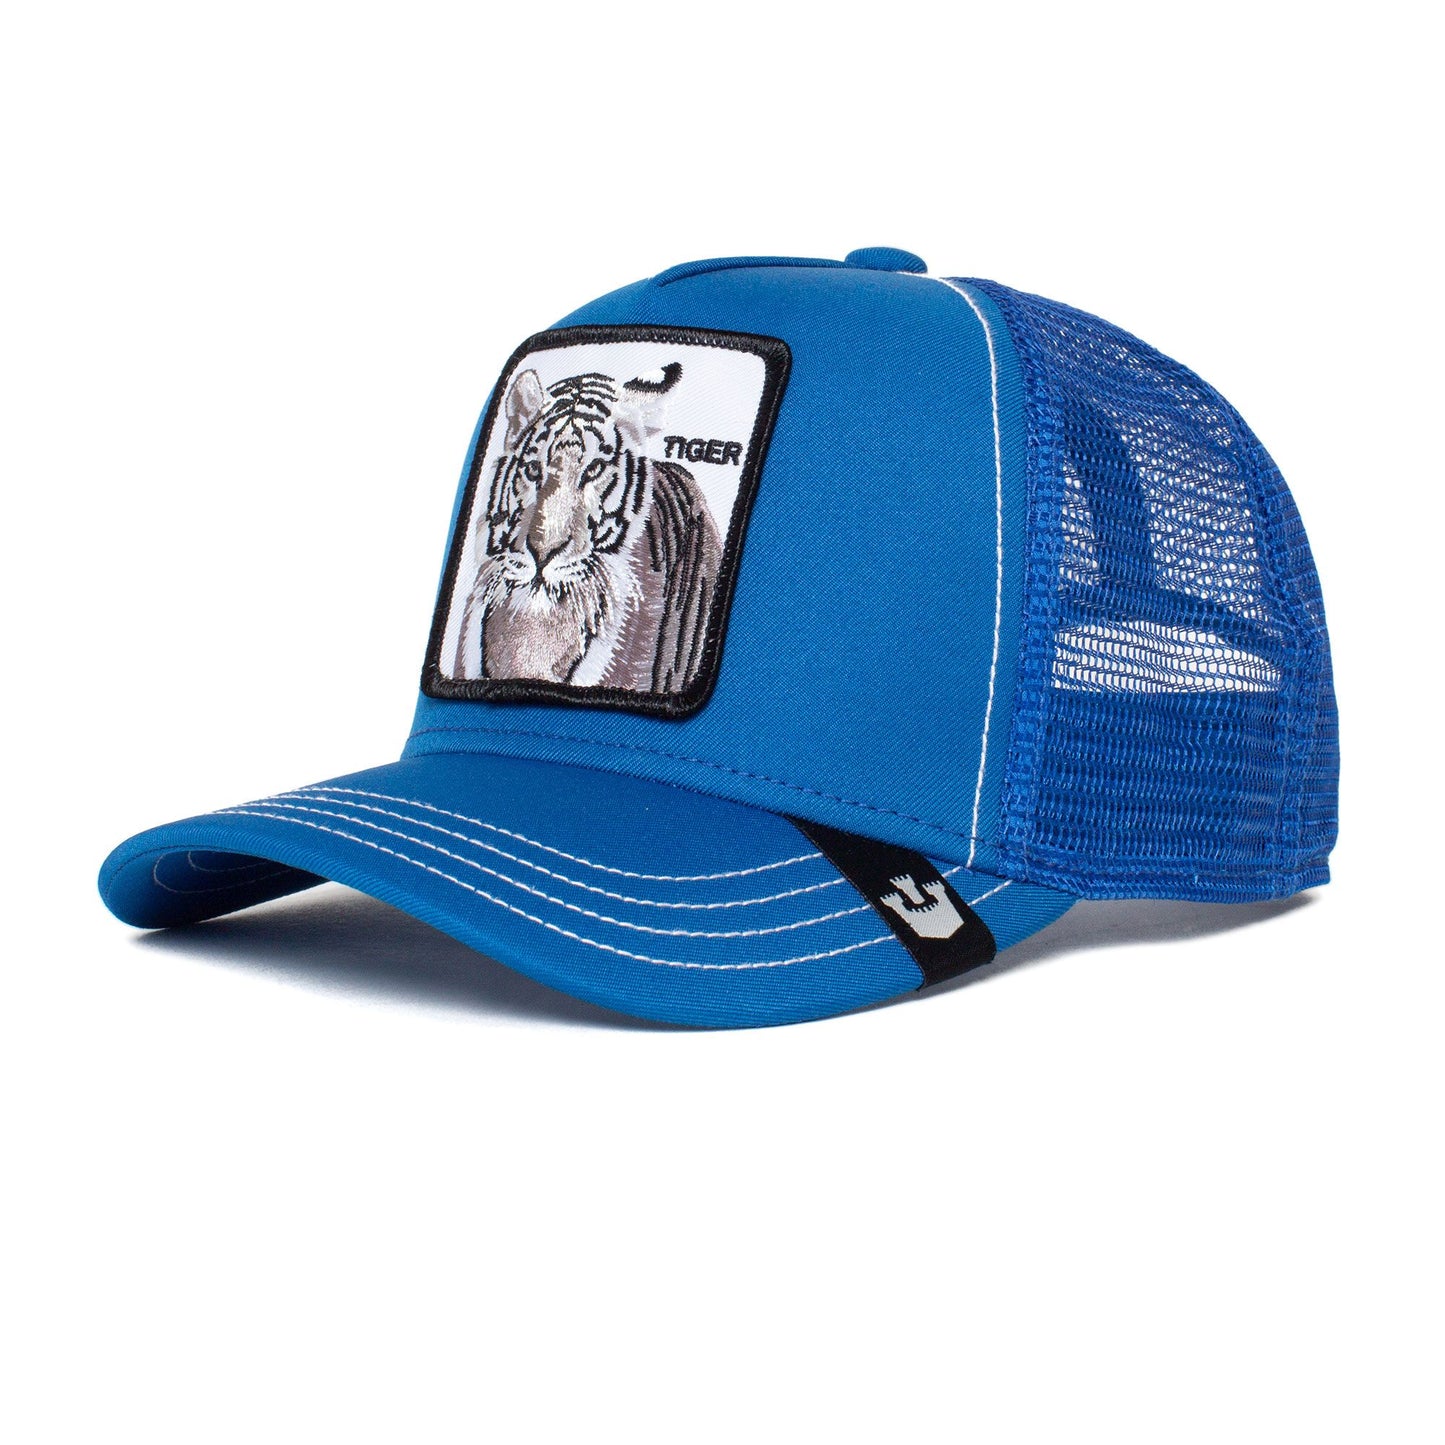 Tiger Snapback Trucker Hat | Kids